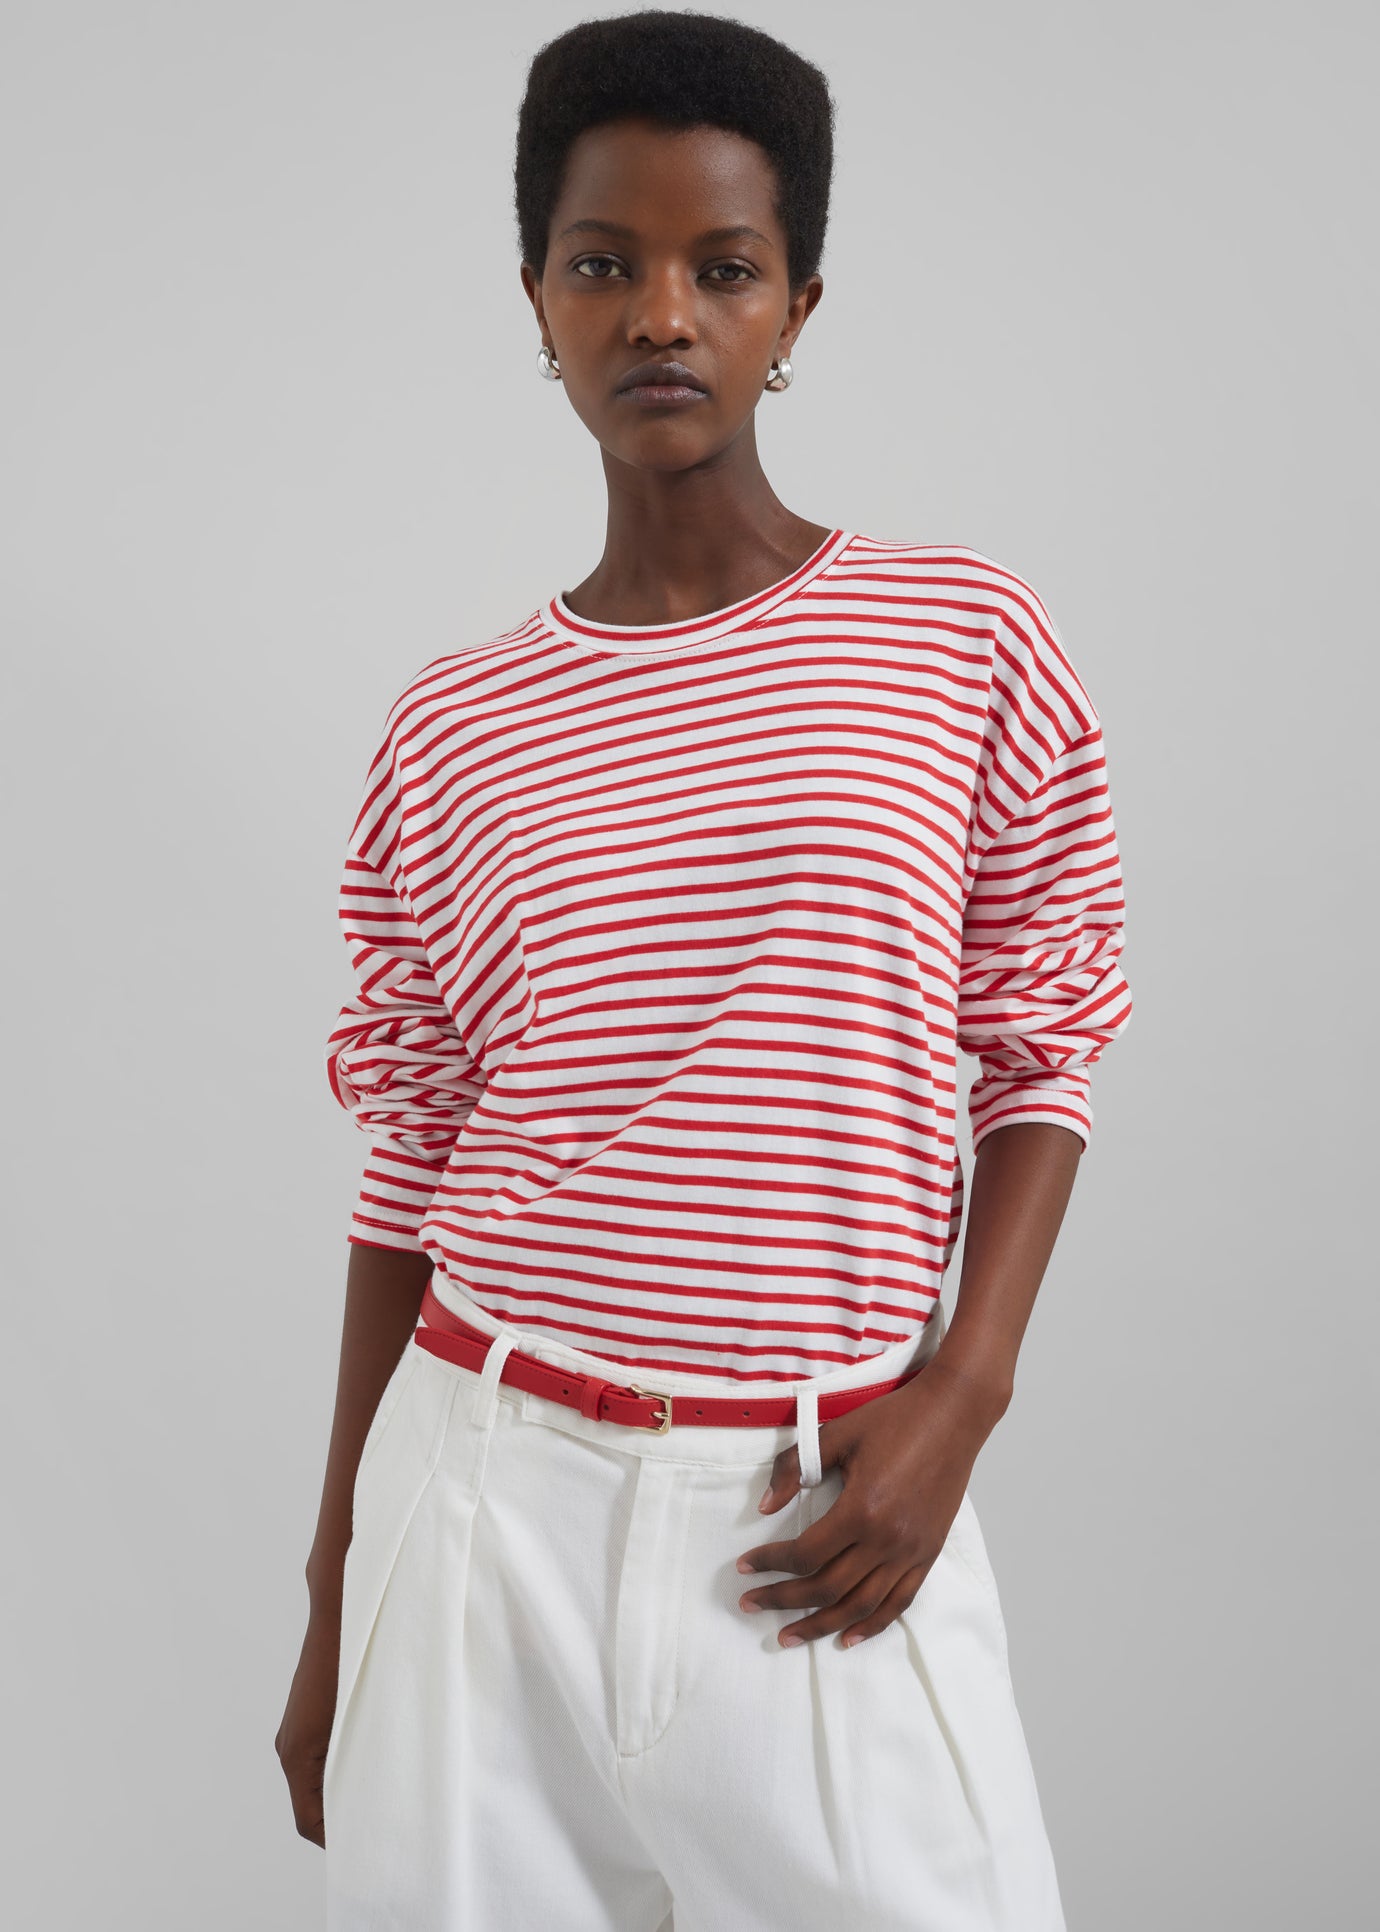 Salome Long Sleeve Tee - White/Red Stripe - 1